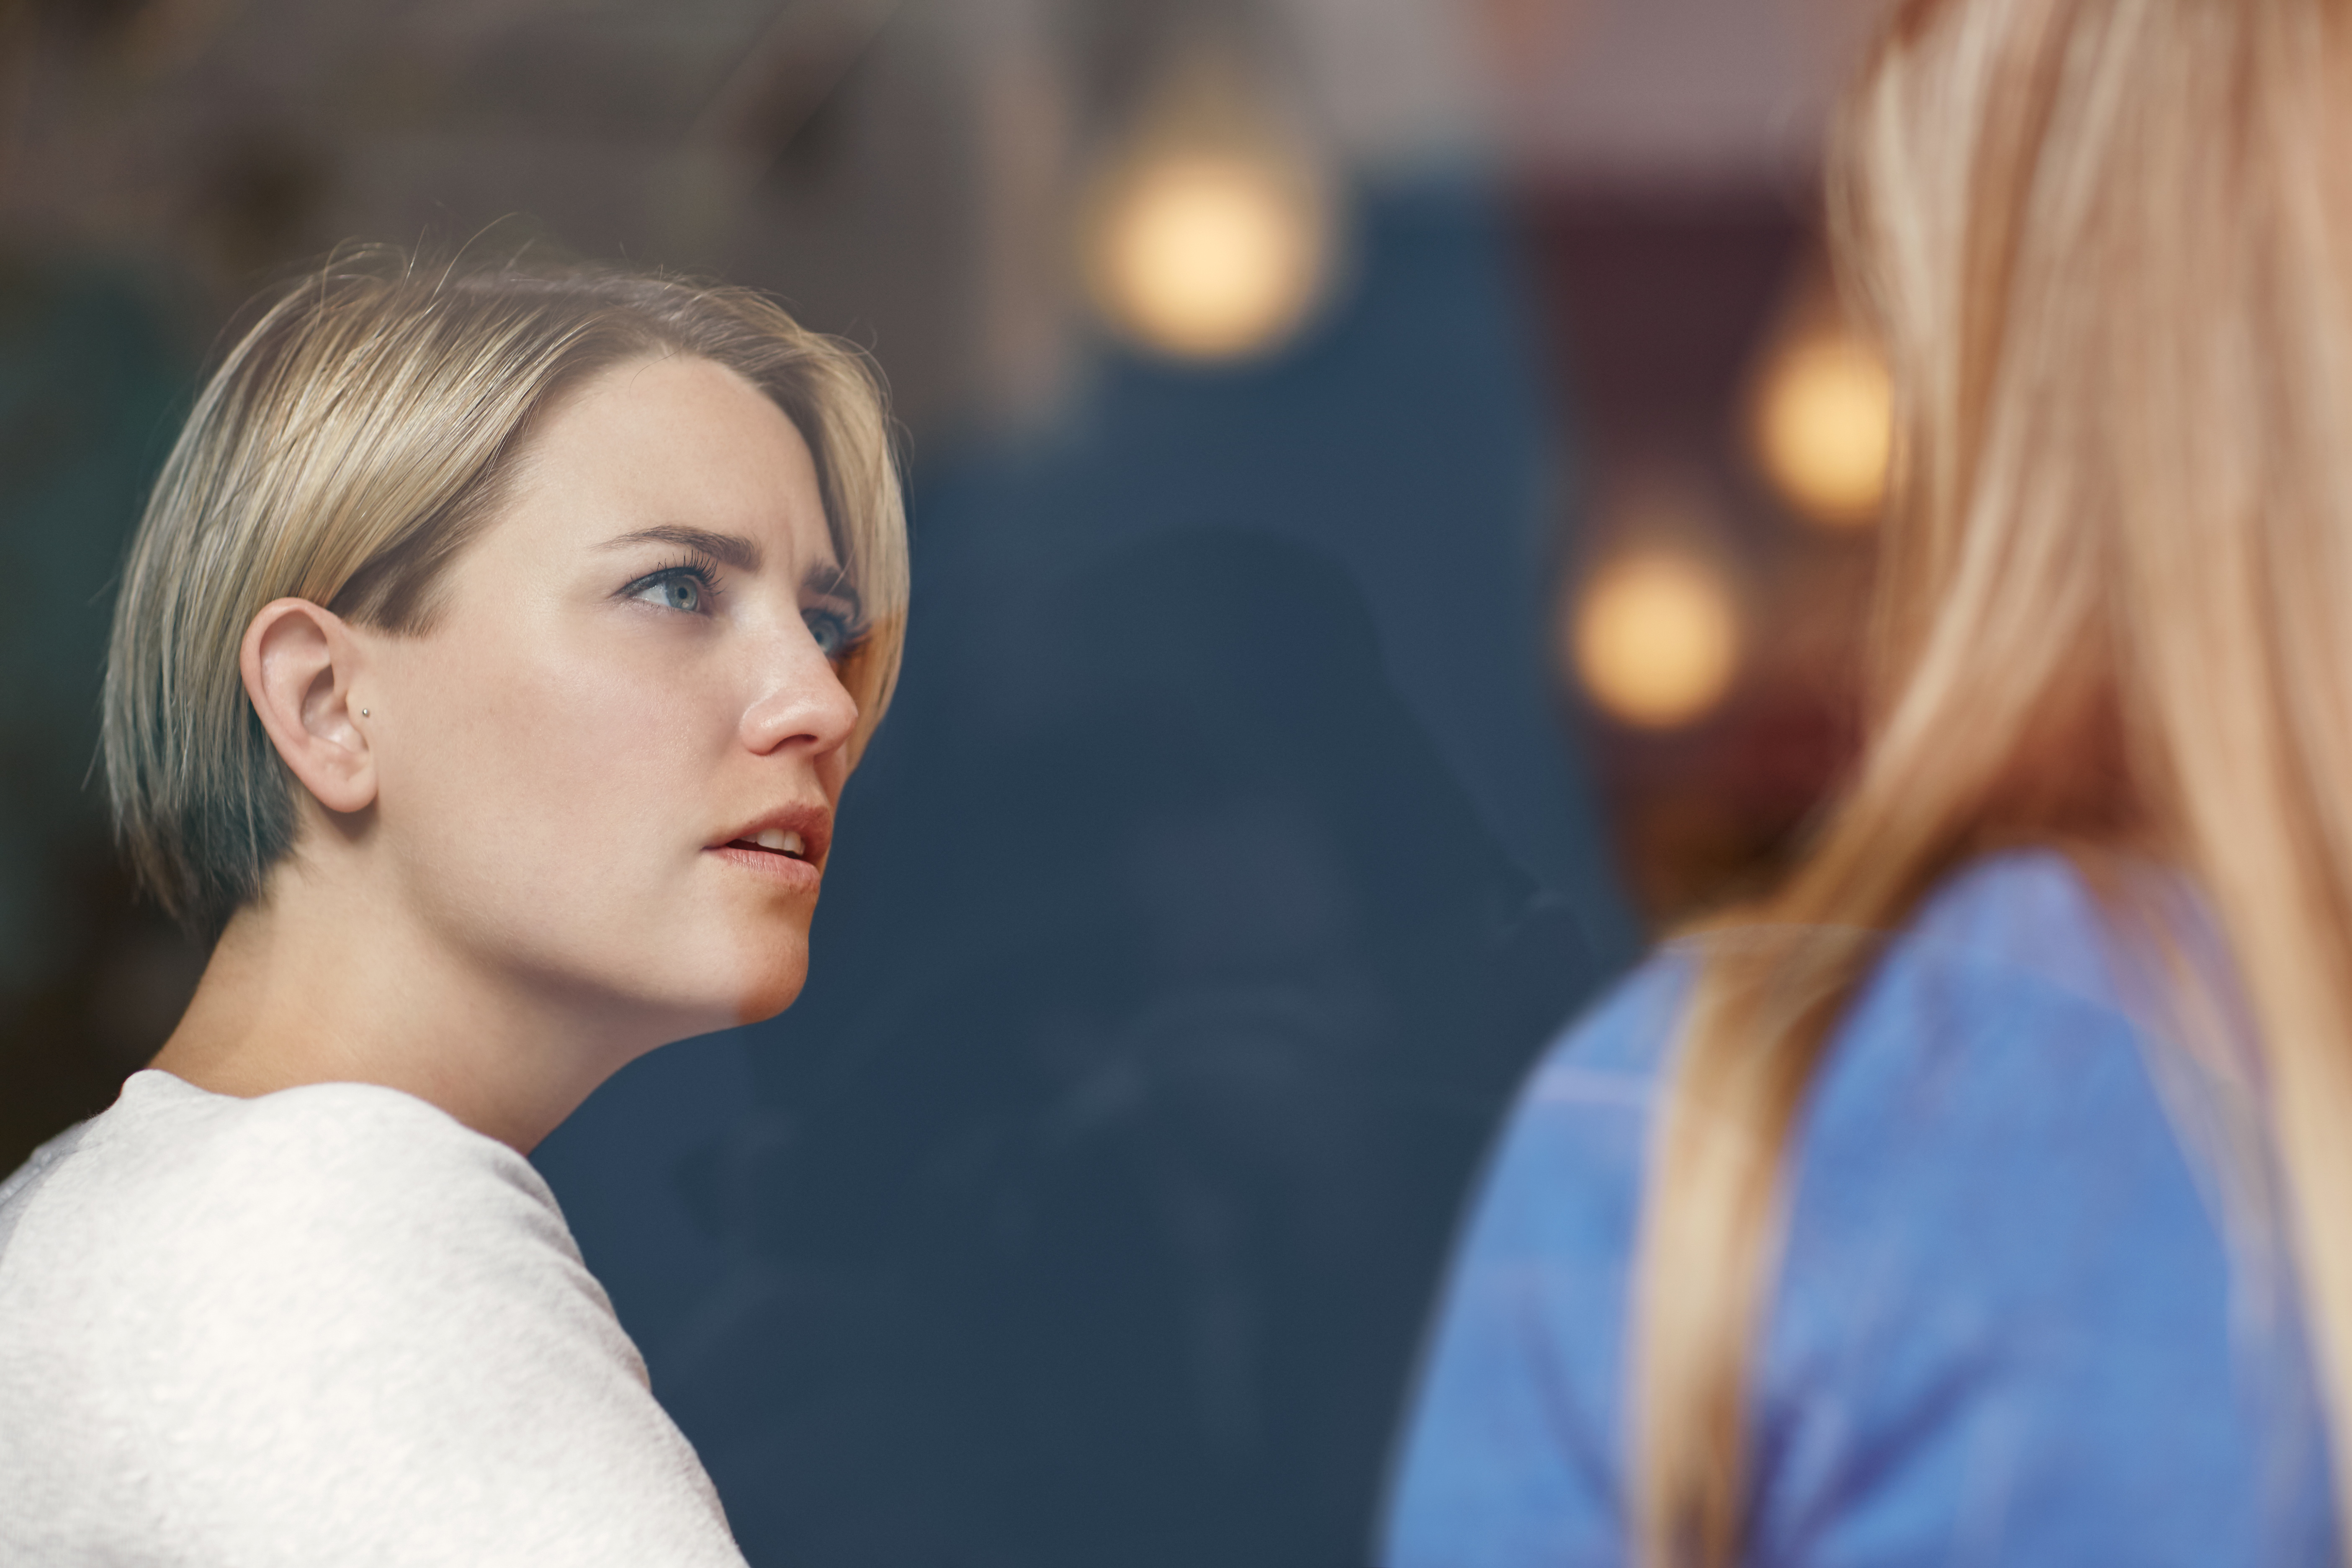 Una mujer hablando con otra mujer | Fuente: Shutterstock